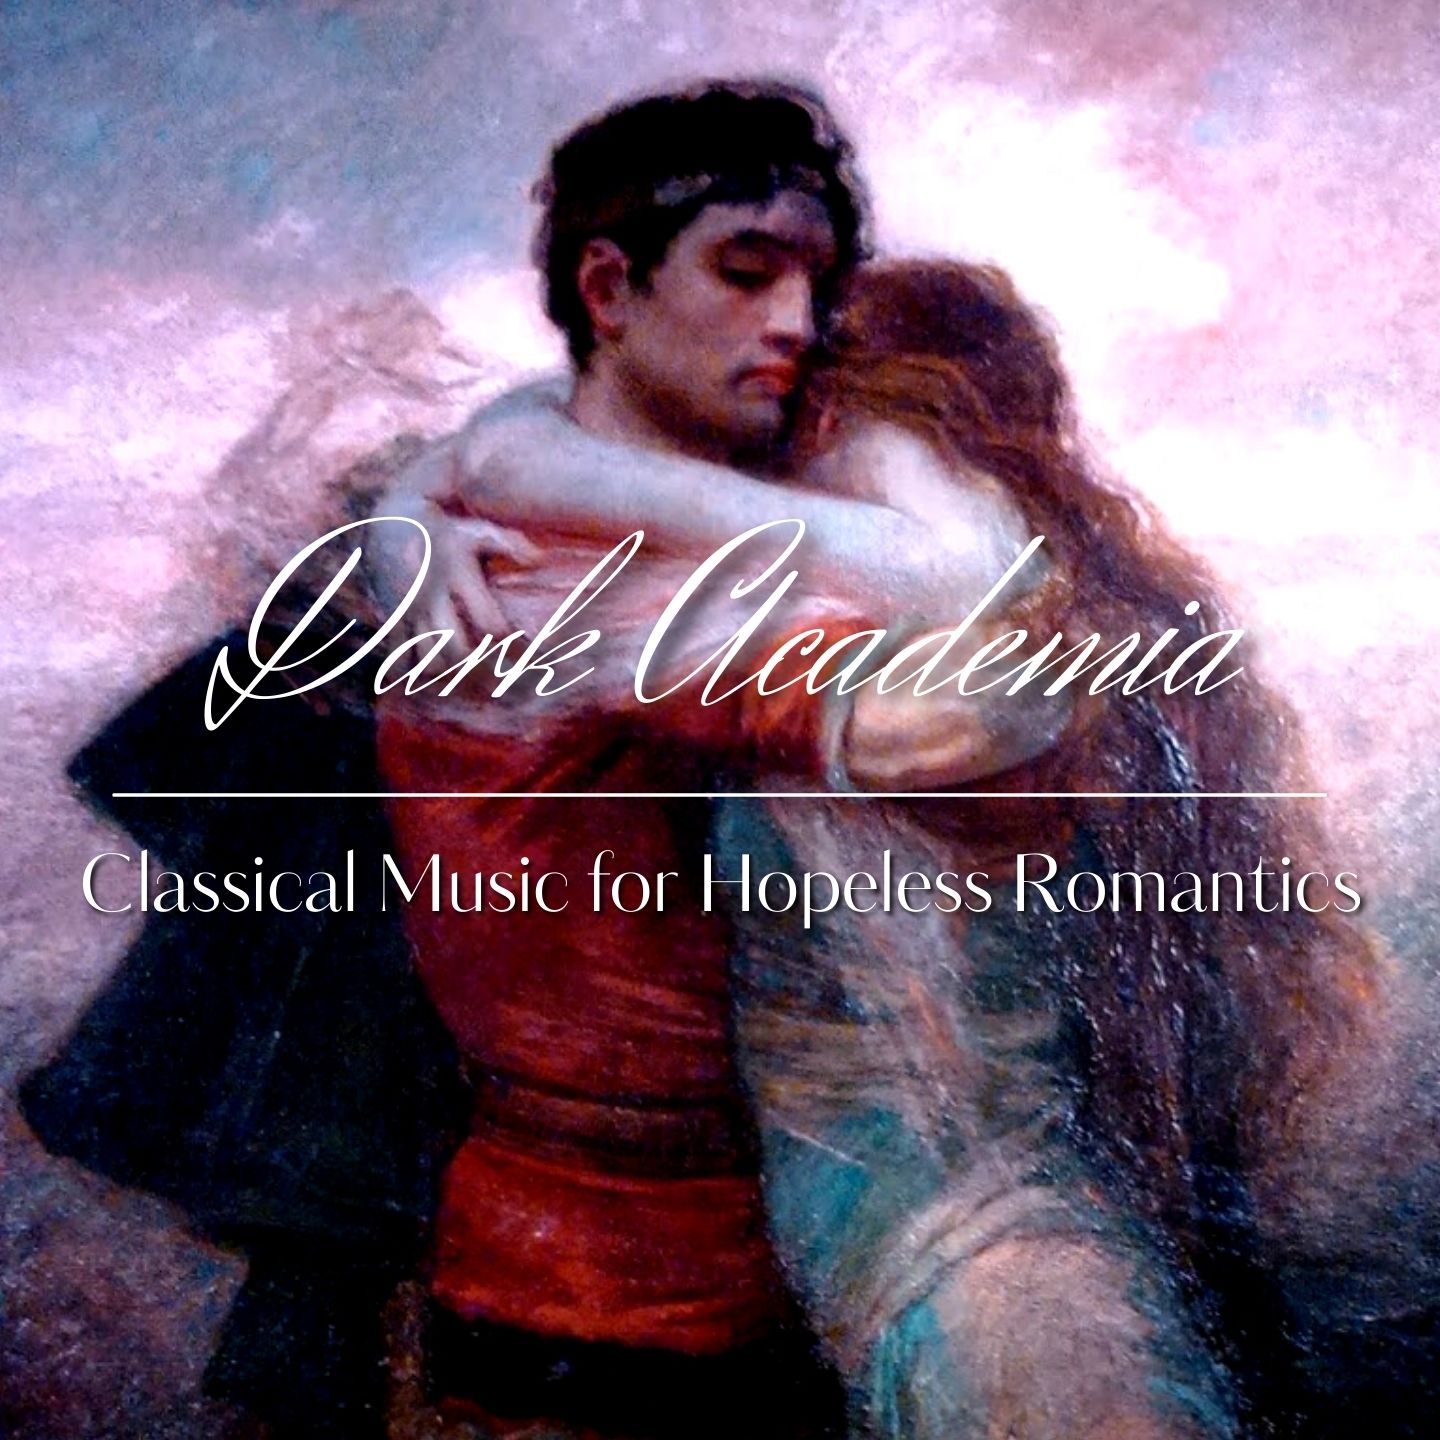 Dark Academia Classical Music for Hopeless Romantics